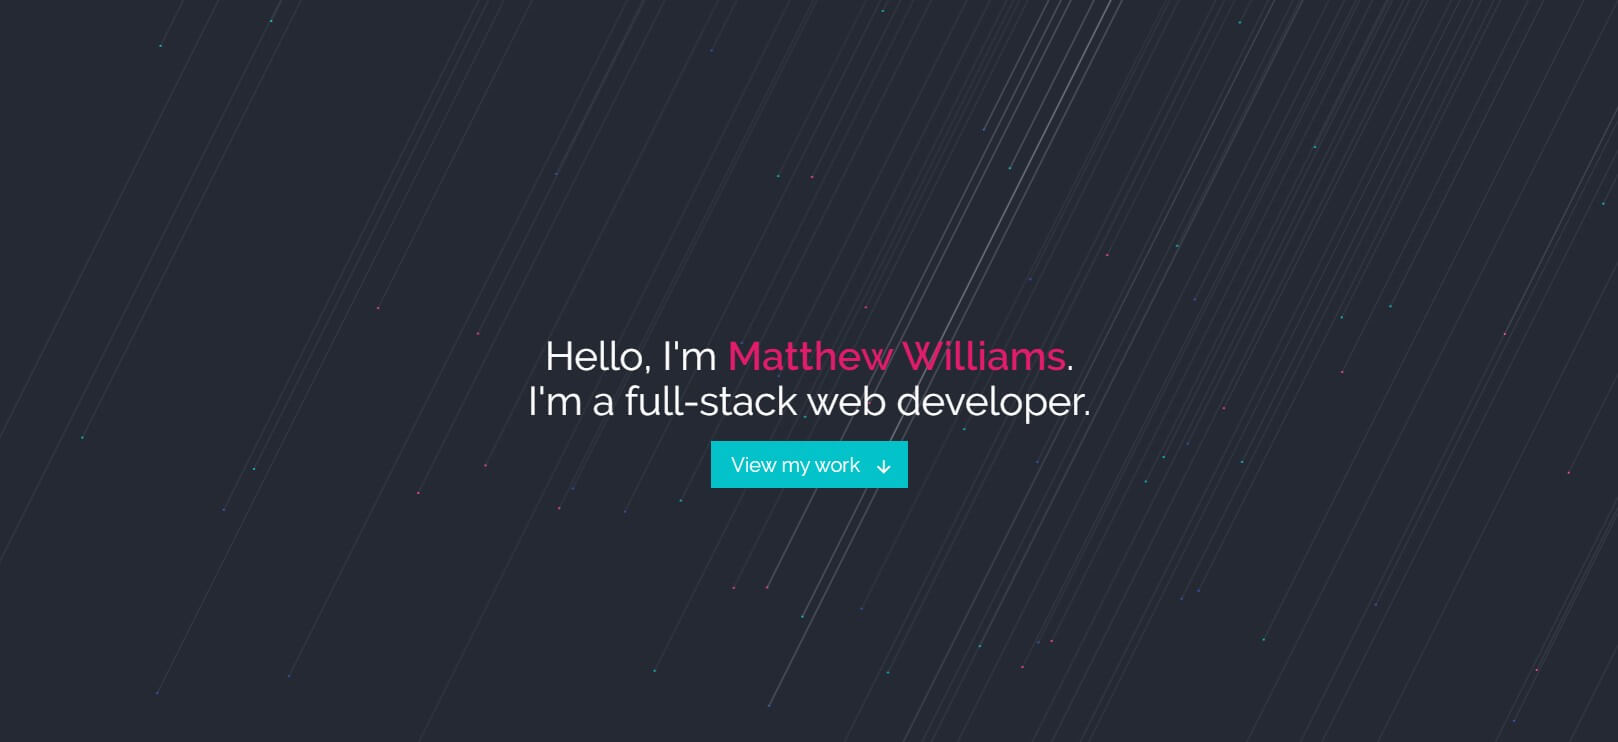 Matthew Williams as a backend developer portfolio example